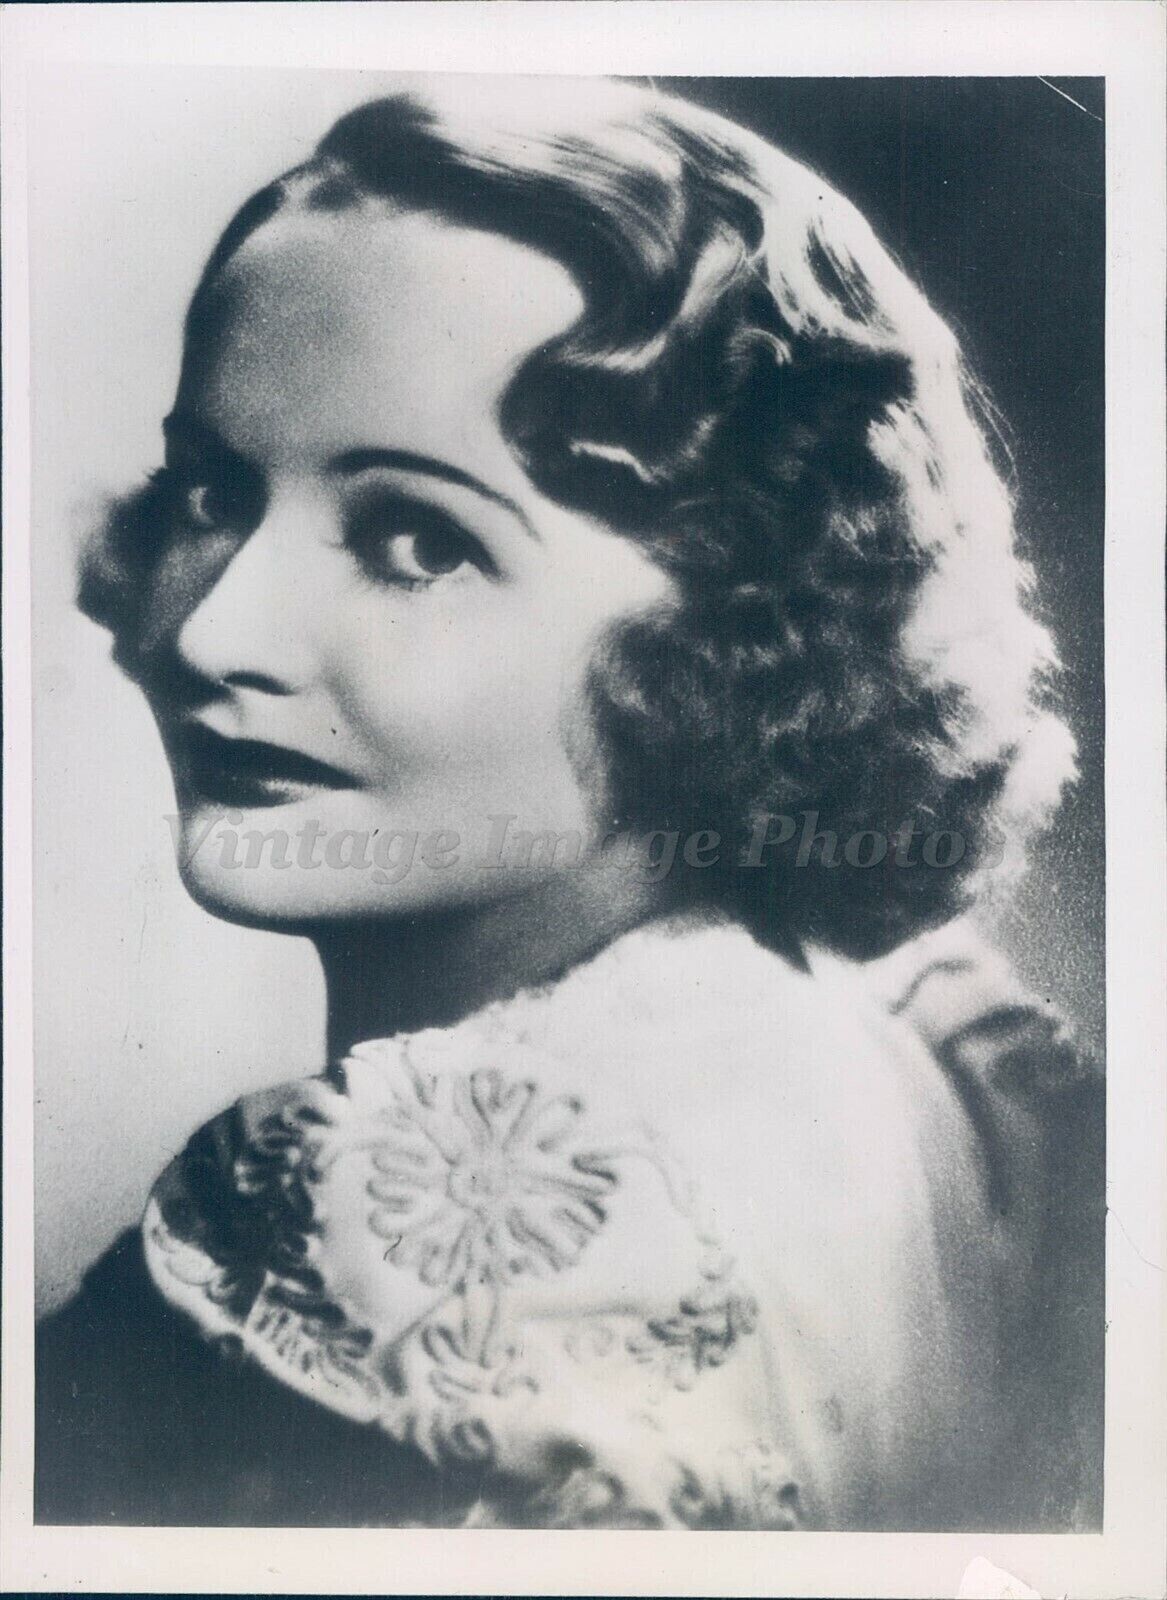 1937 Mrs Jean McDonald Suit Love Thomas Warner Jr Beautiful Drama Captive Photo